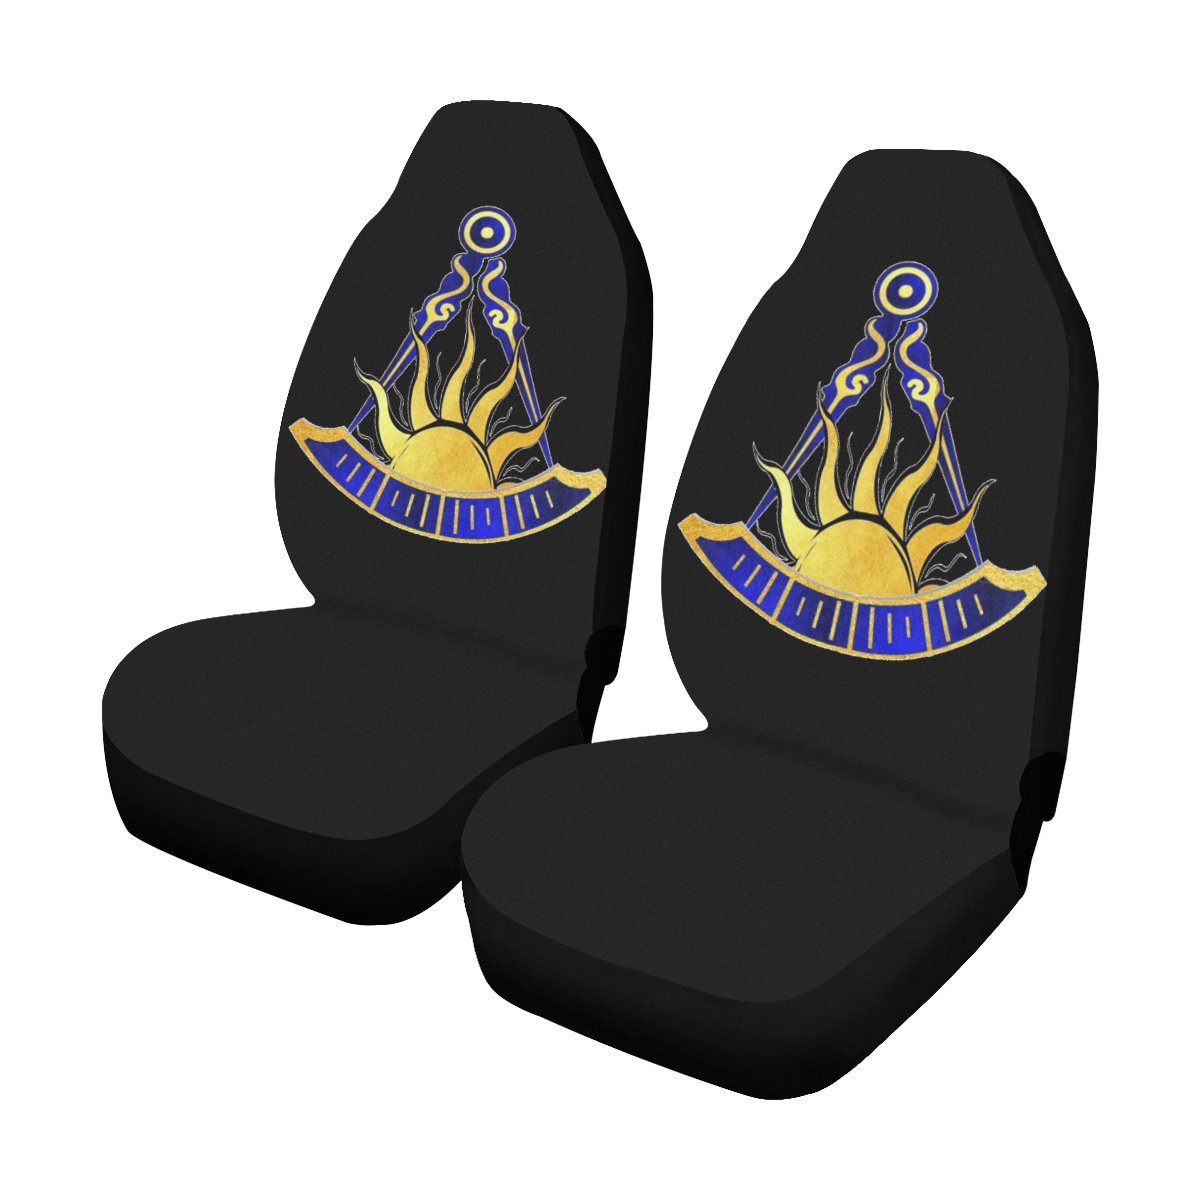 Benevolent-PM Car Seat Covers (Set of 2)